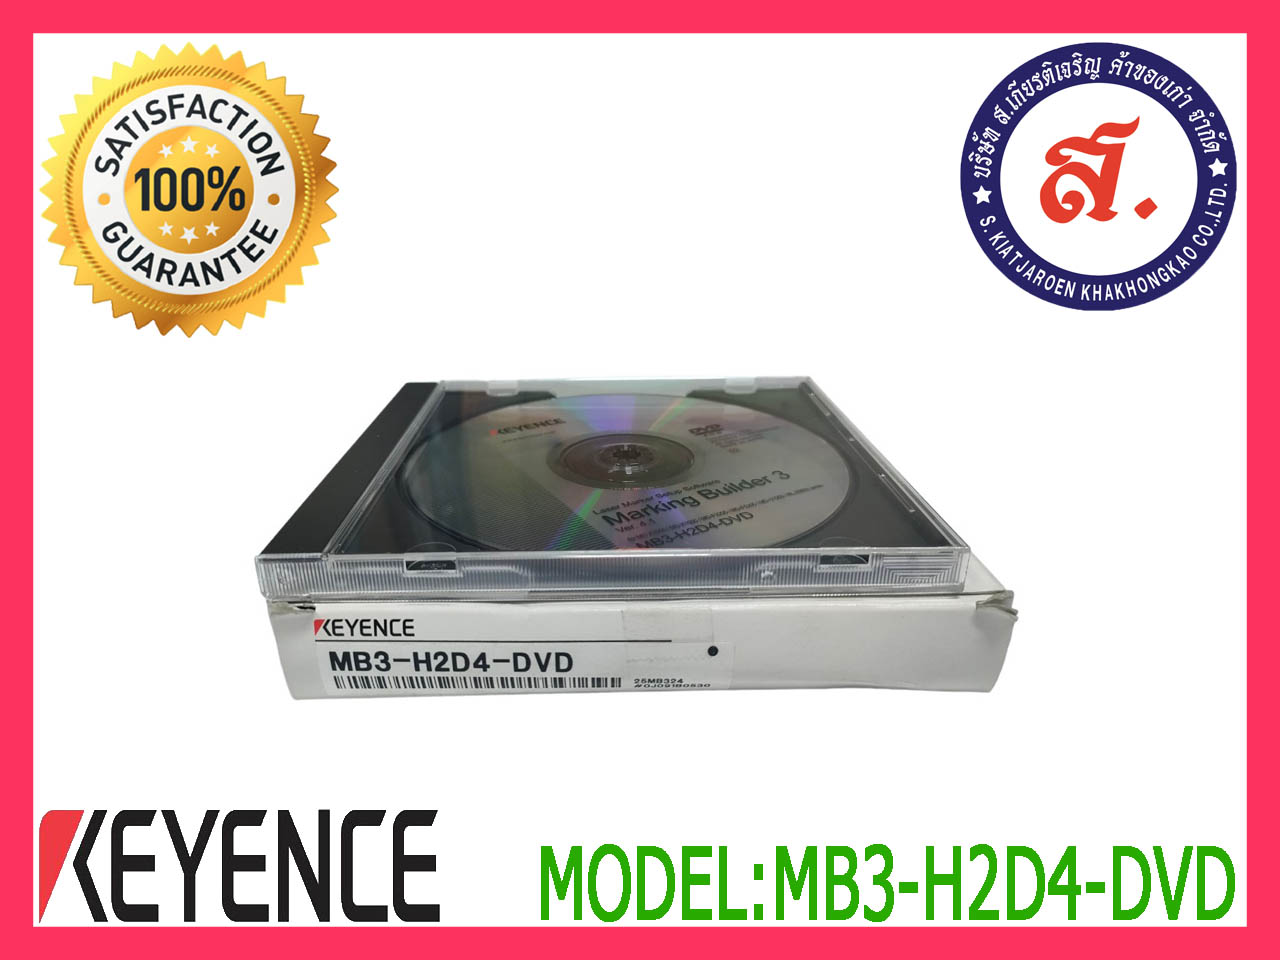 KEYENCE MB3-H2D4-DVD 新品未使用品 日本クリアランス www.paminne.com